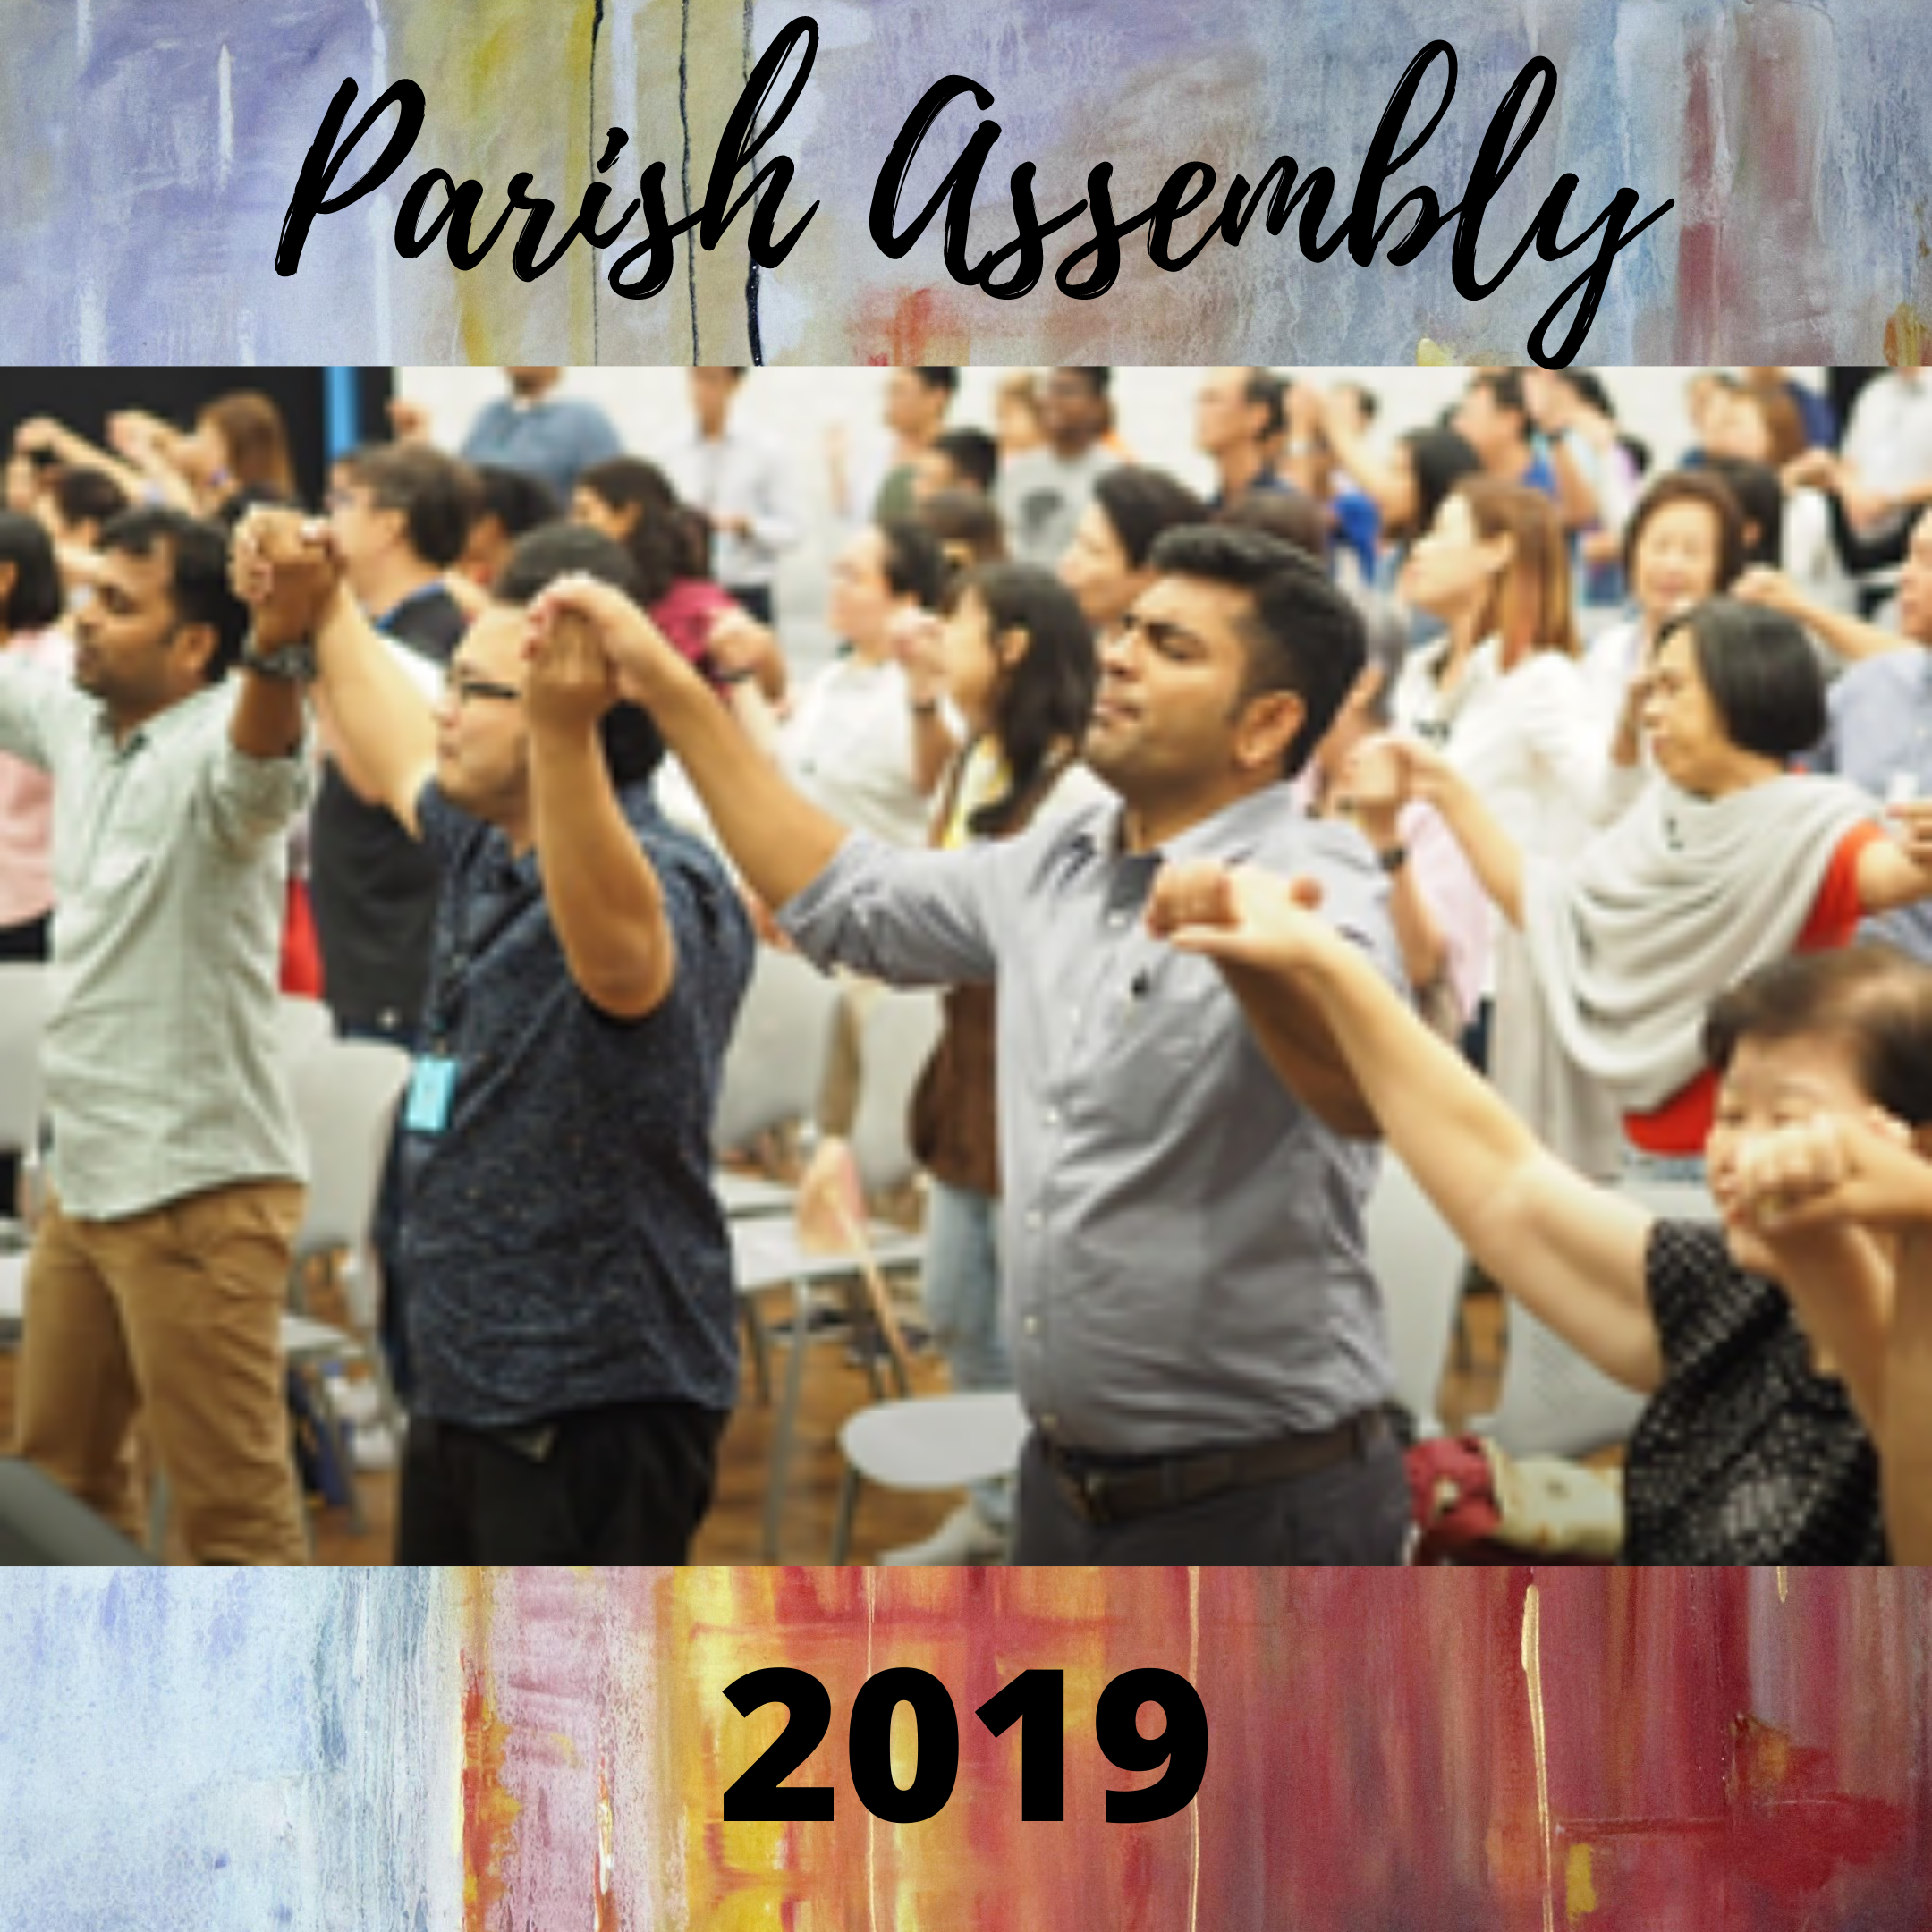 Parish Assembly 2019